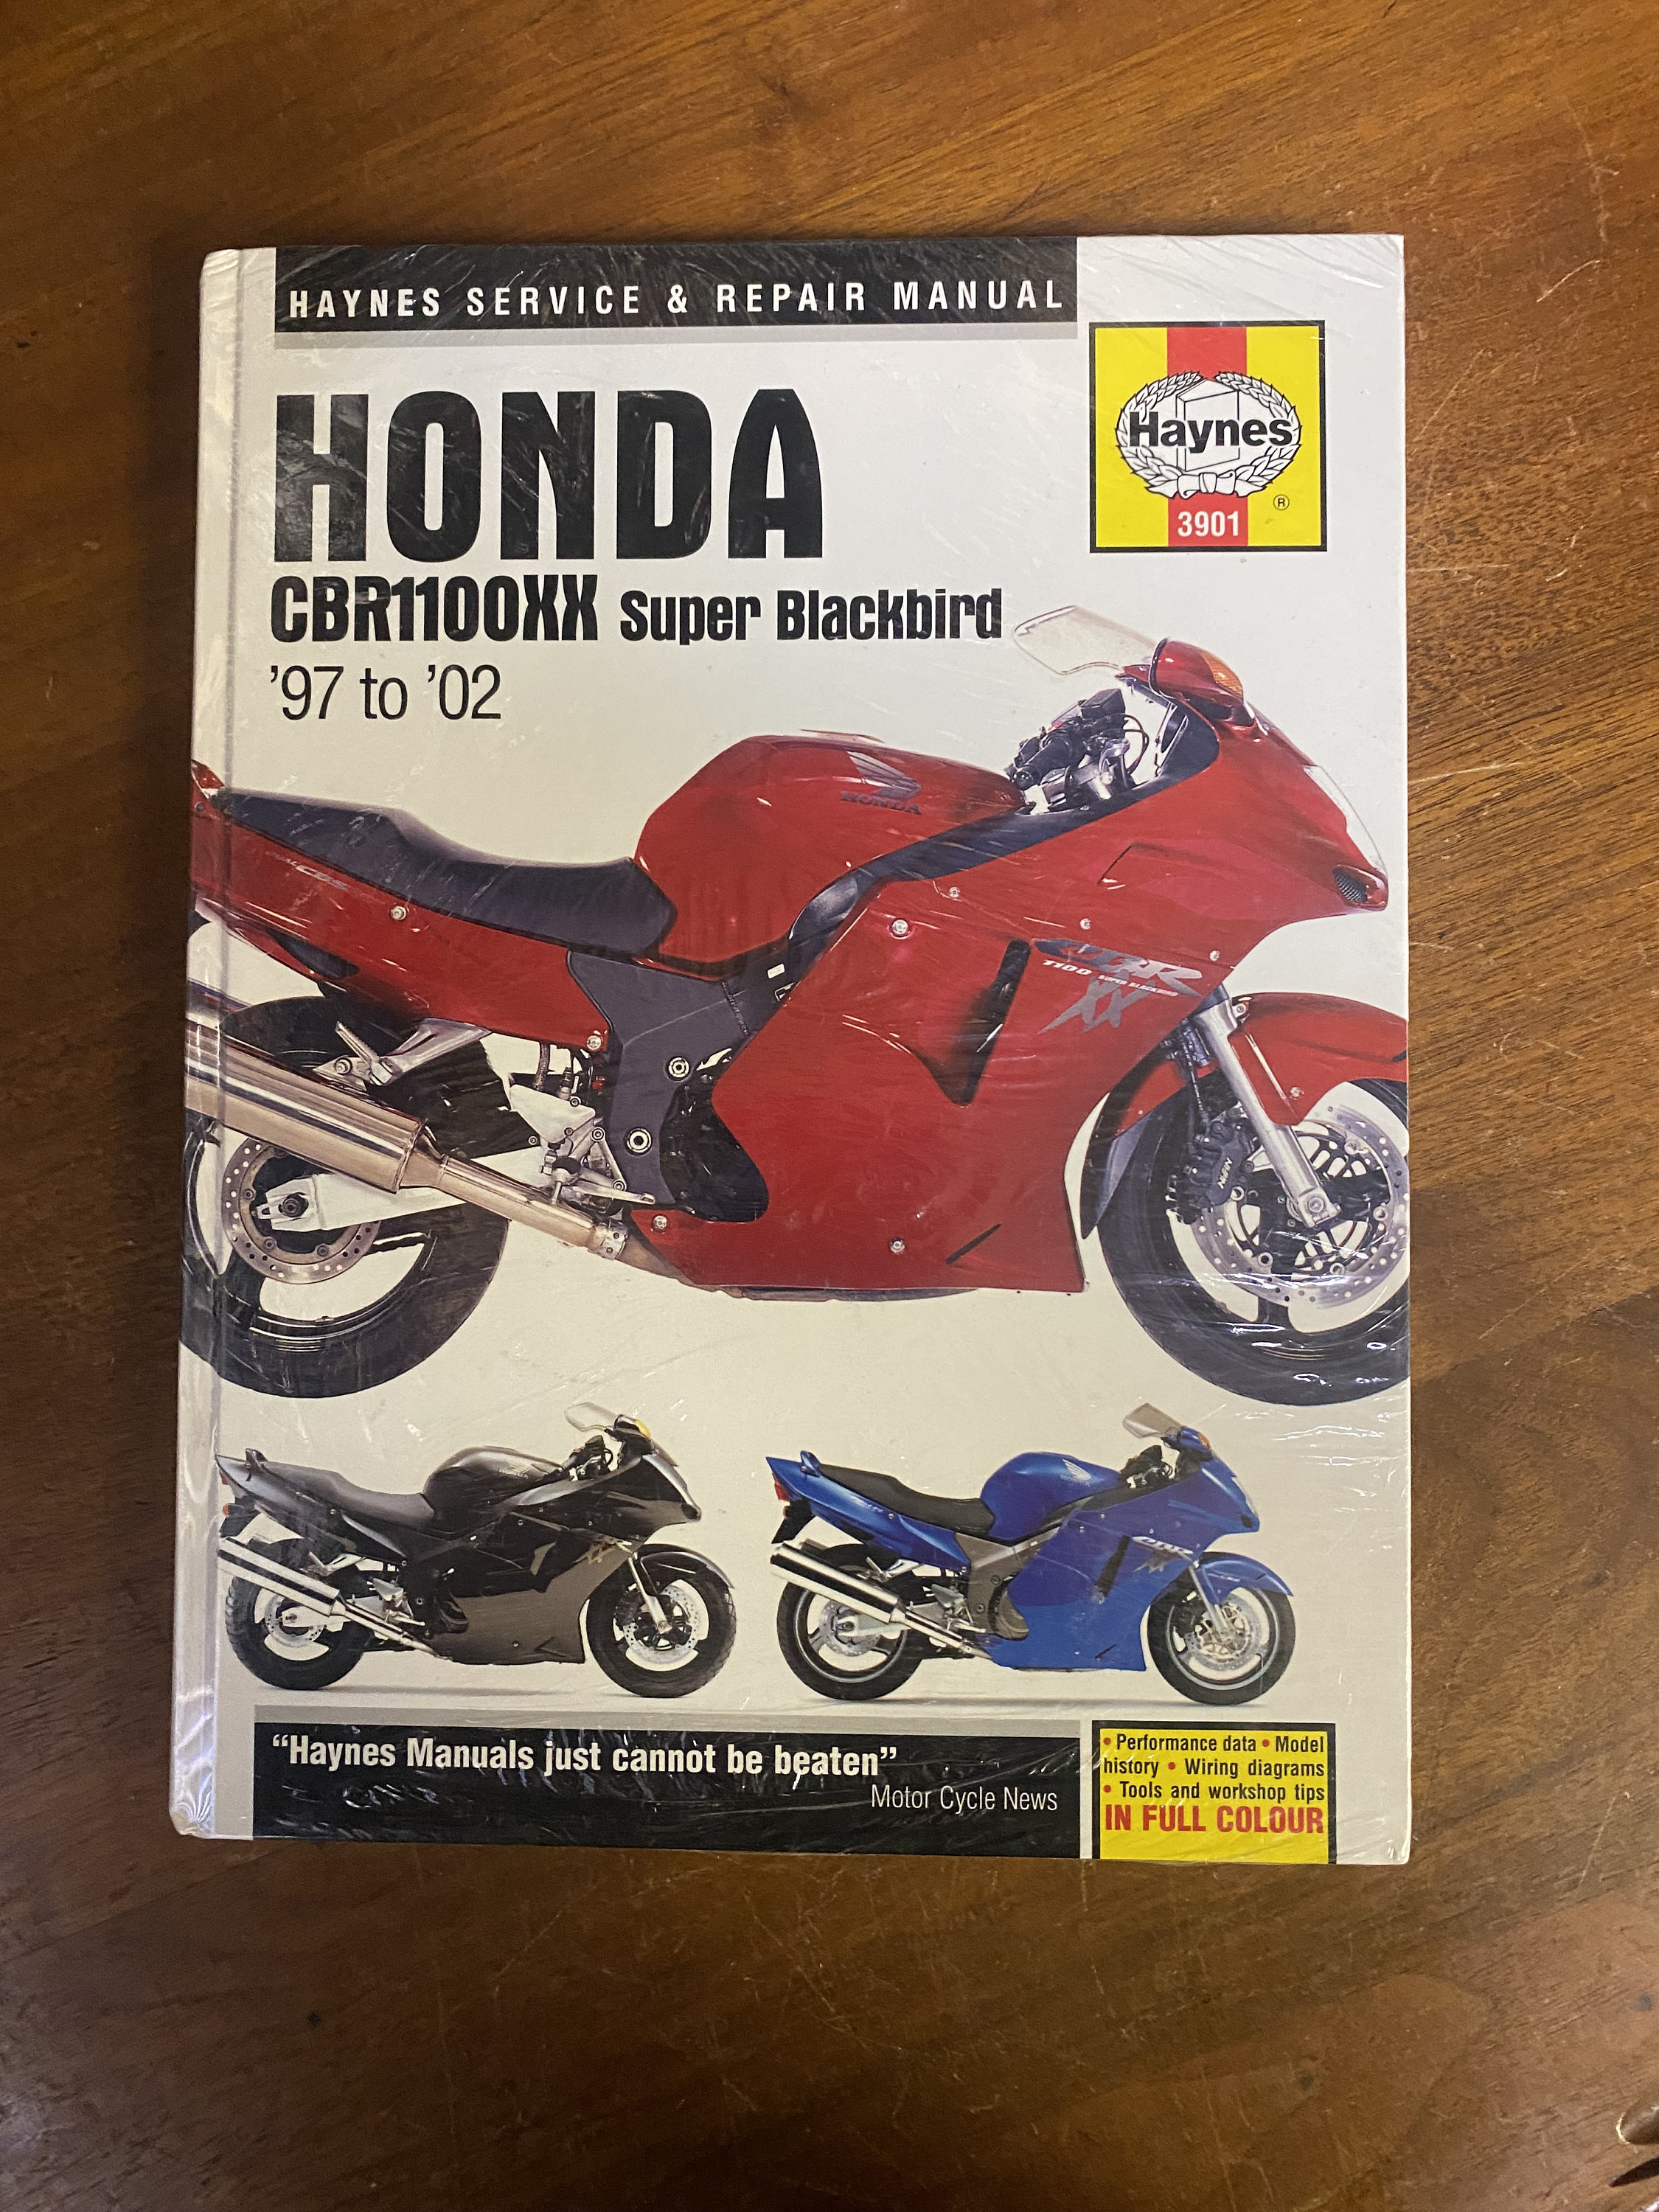 Honda CBR1100XX Super Blackbird 97 to 02 (Haynes Service & Repair Manual)  Hardcover